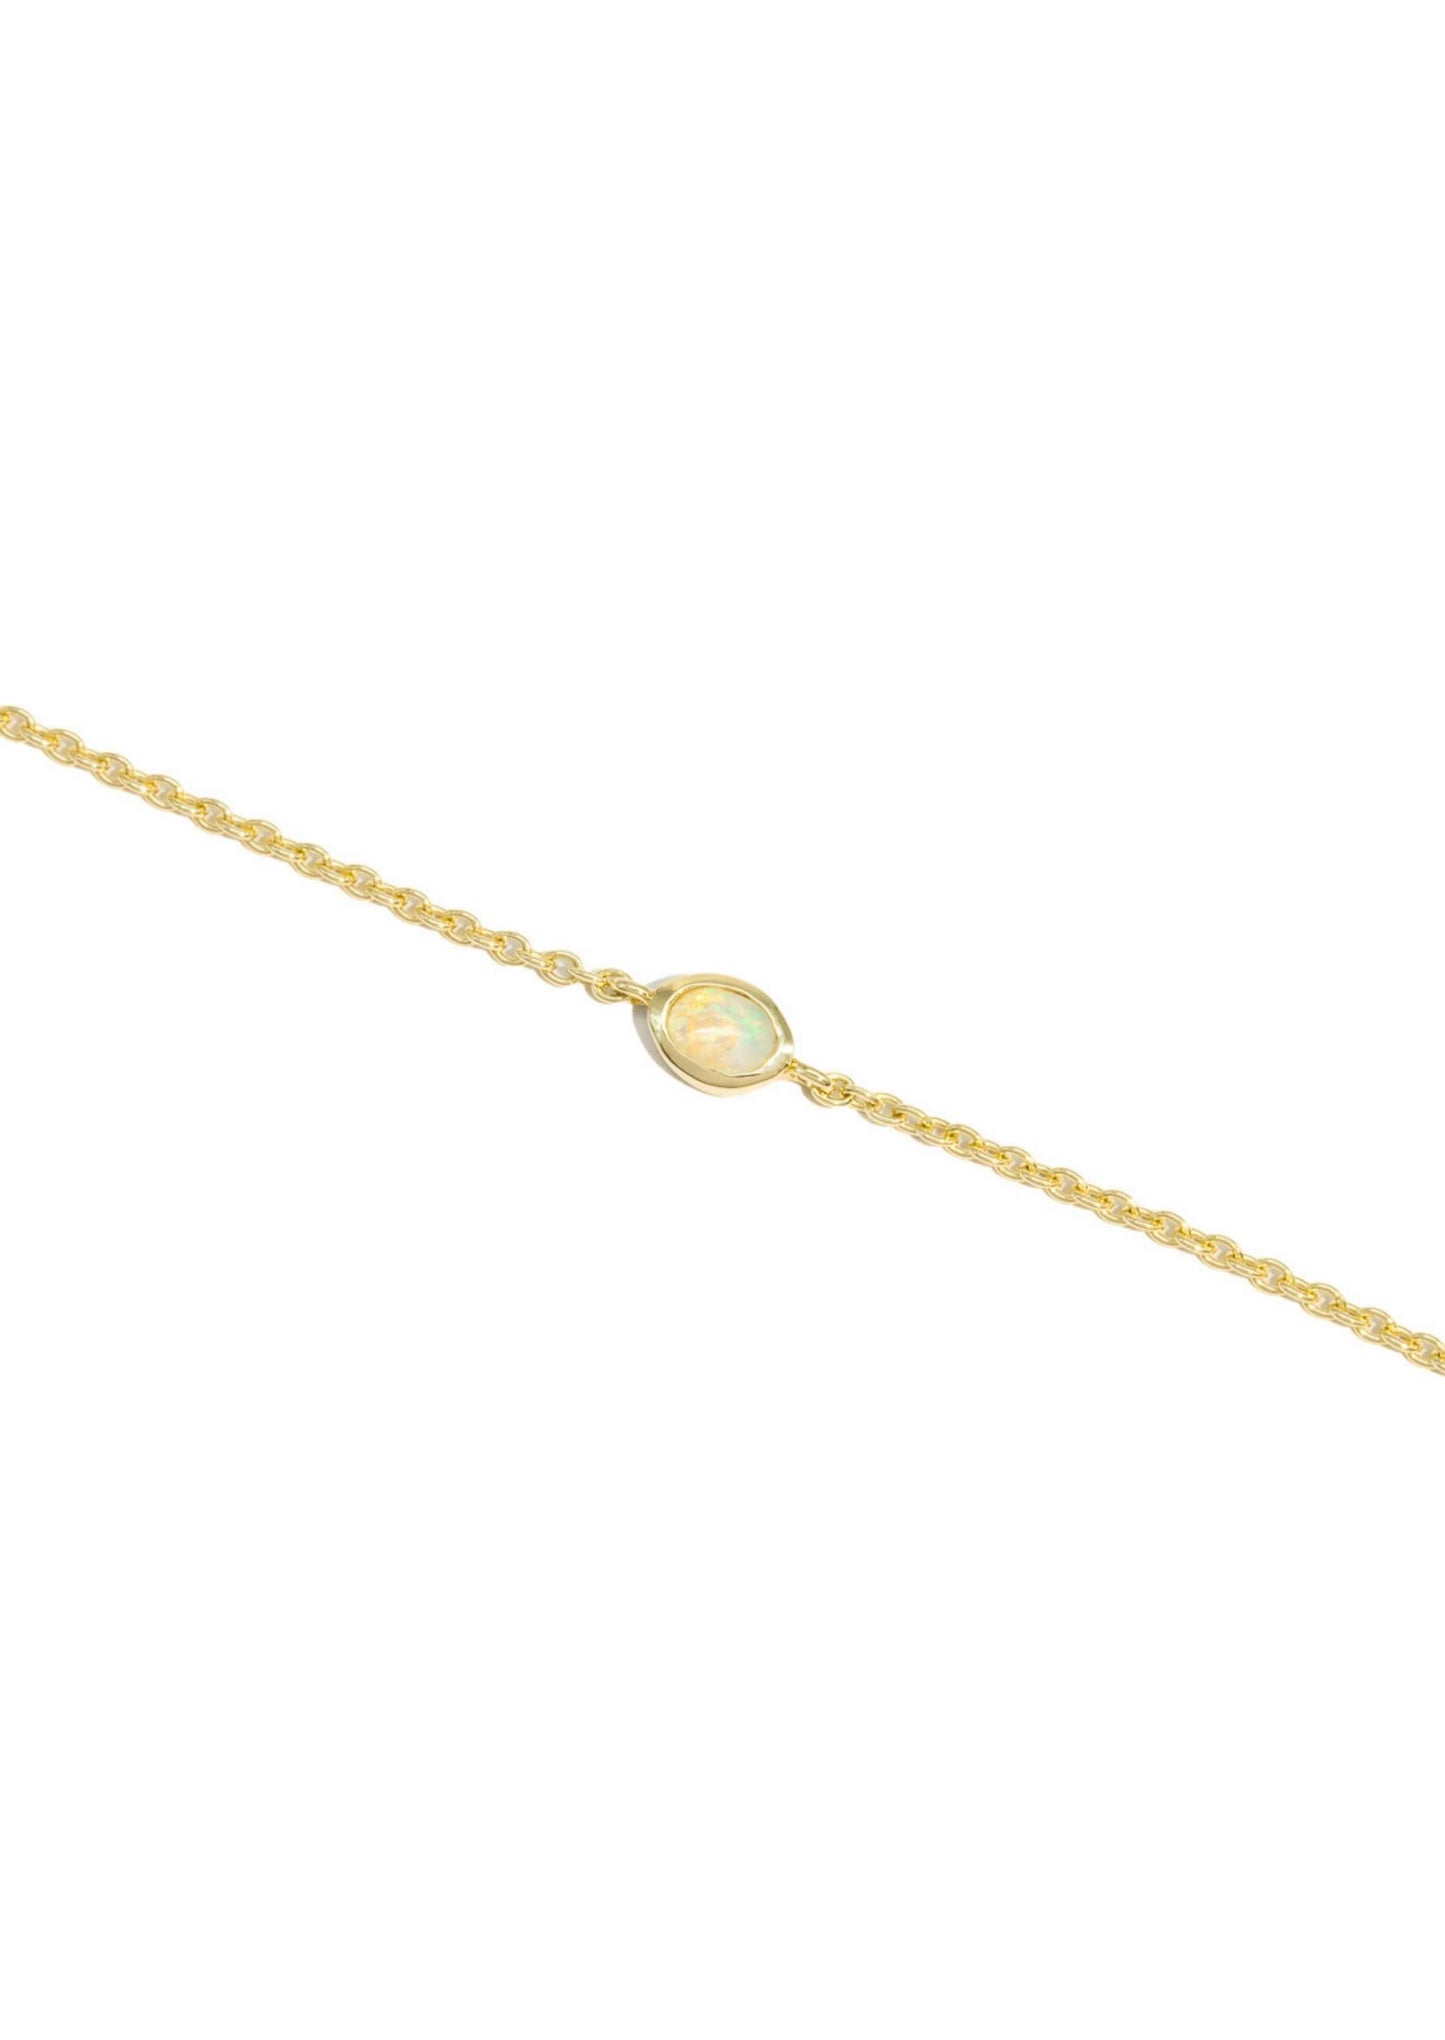 The Solid Gold Opal Lumin Bracelet